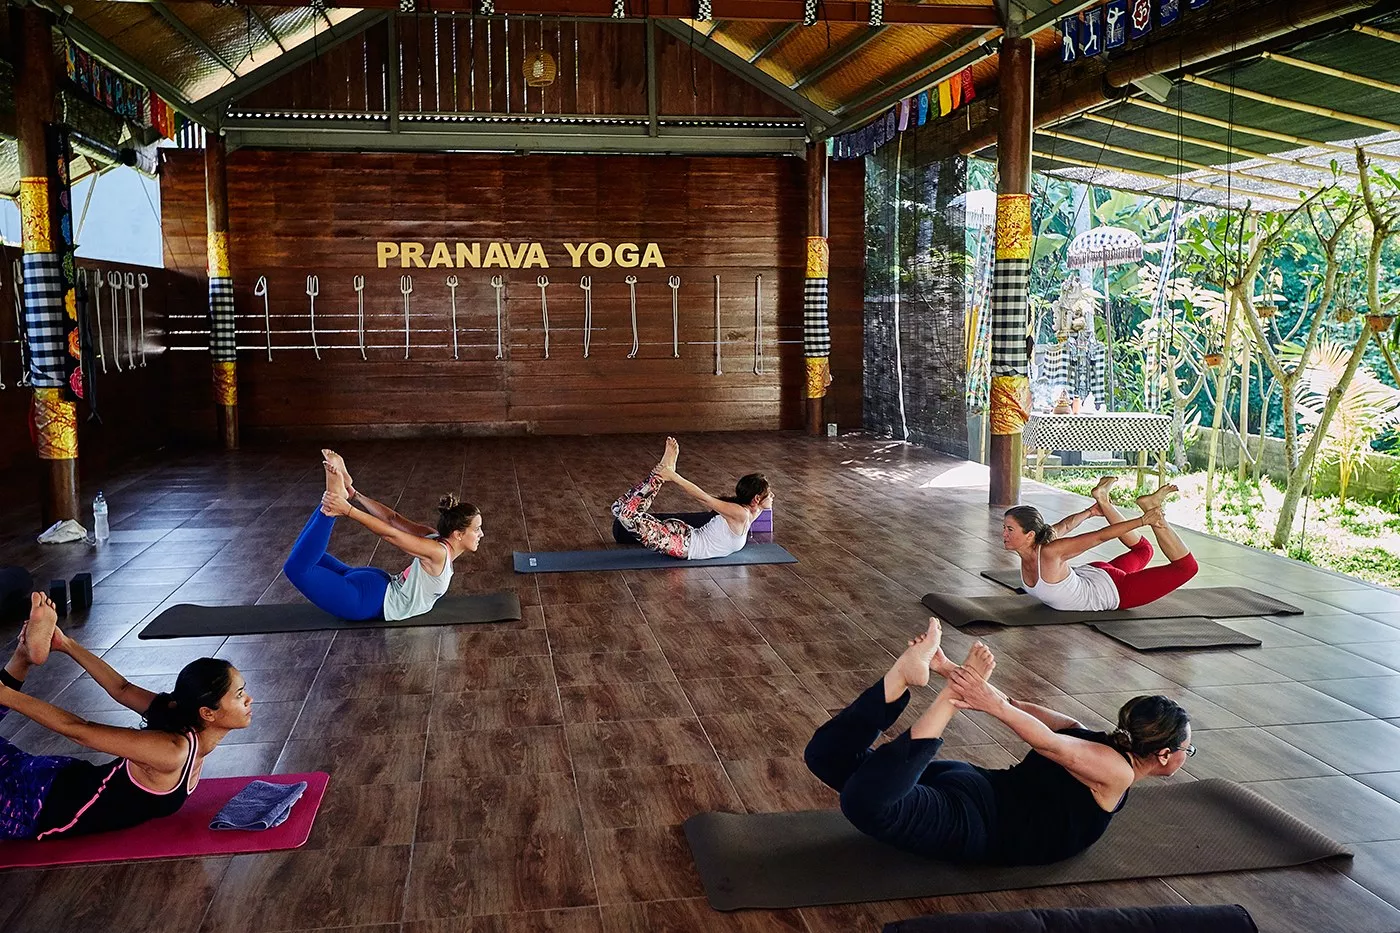 Pranava Yoga in Indonesia, Central Asia | Yoga - Rated 1.5